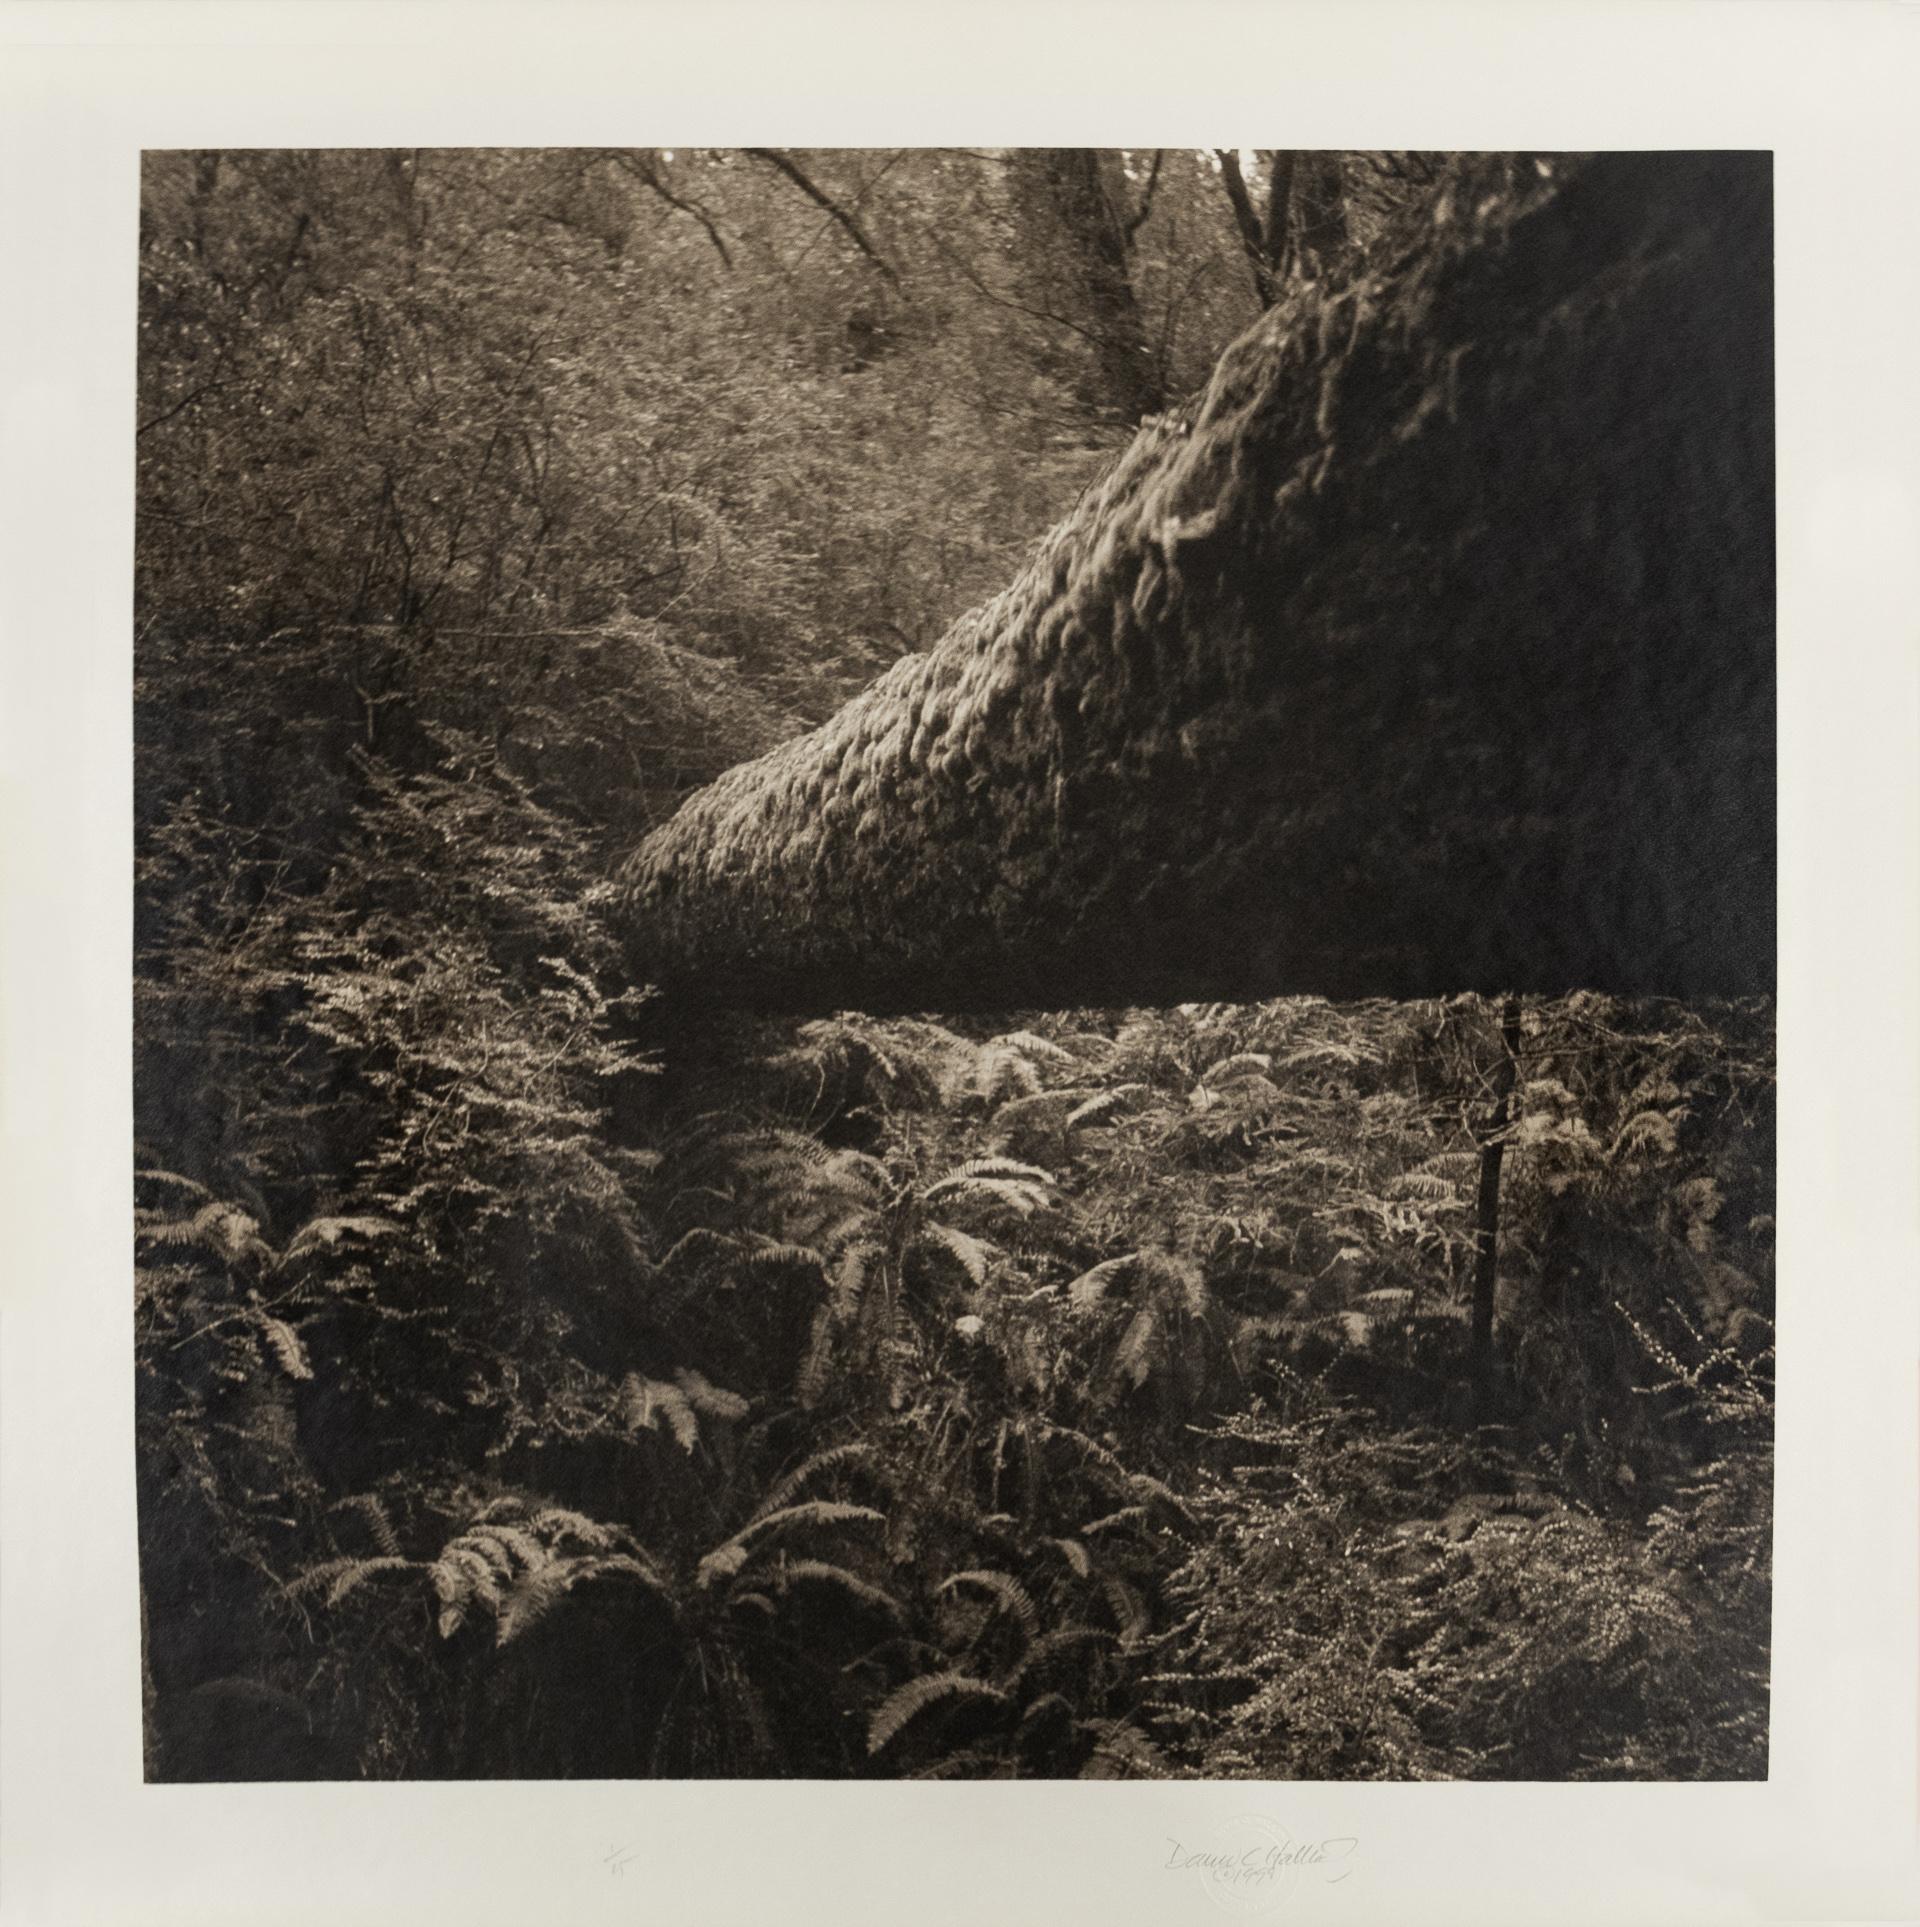 Séquoia tombé - Photograph de David Halliday